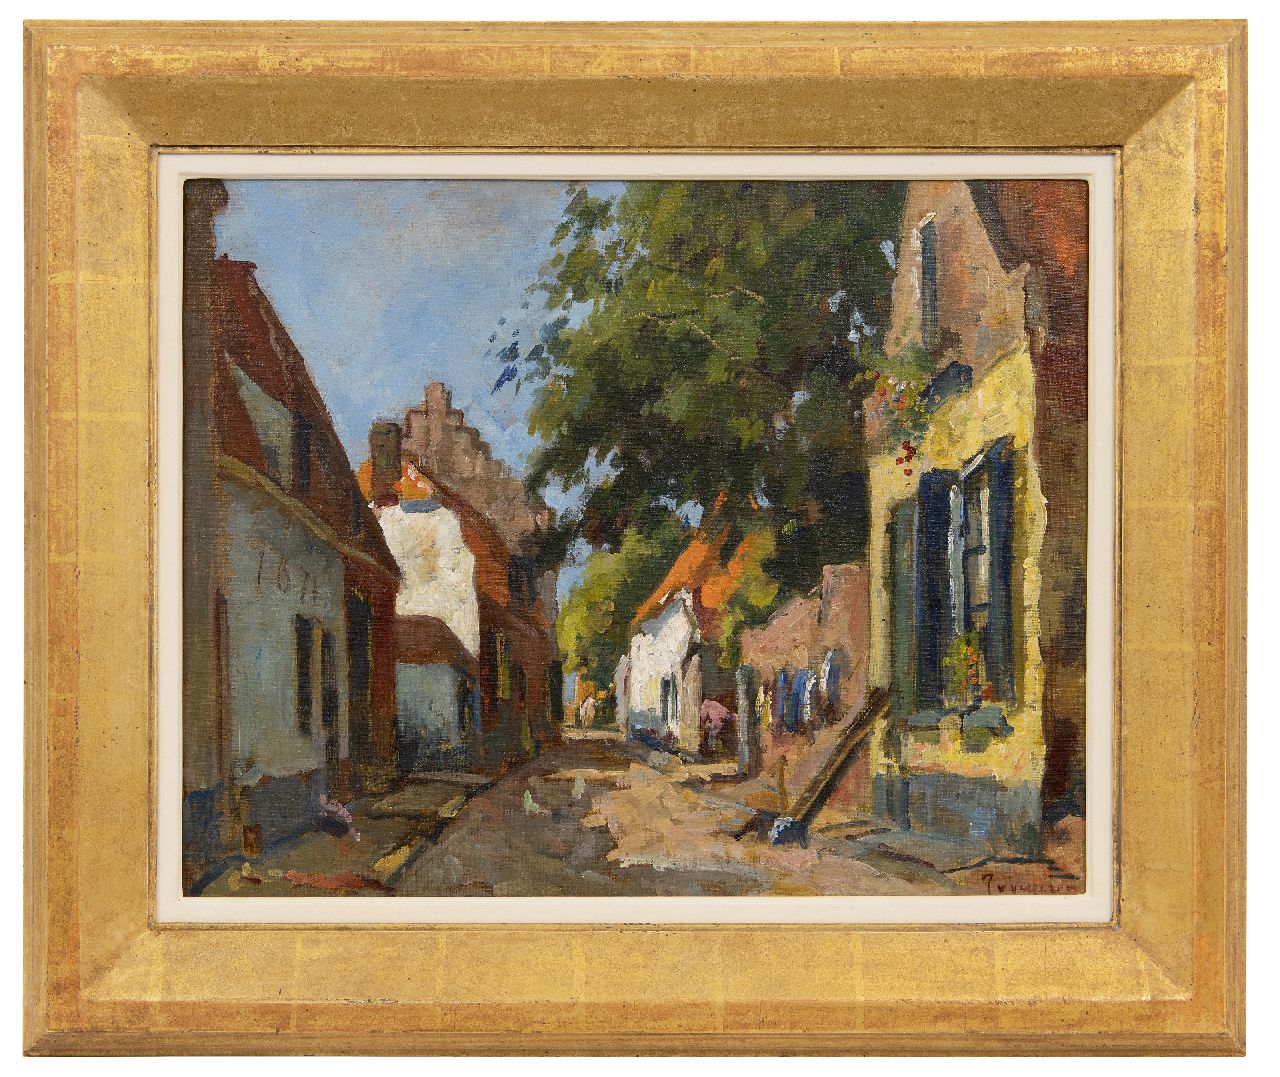 Vuuren J. van | Jan van Vuuren | Paintings offered for sale | Sunny village street, oil on canvas 40.0 x 50.1 cm, signed l.r.